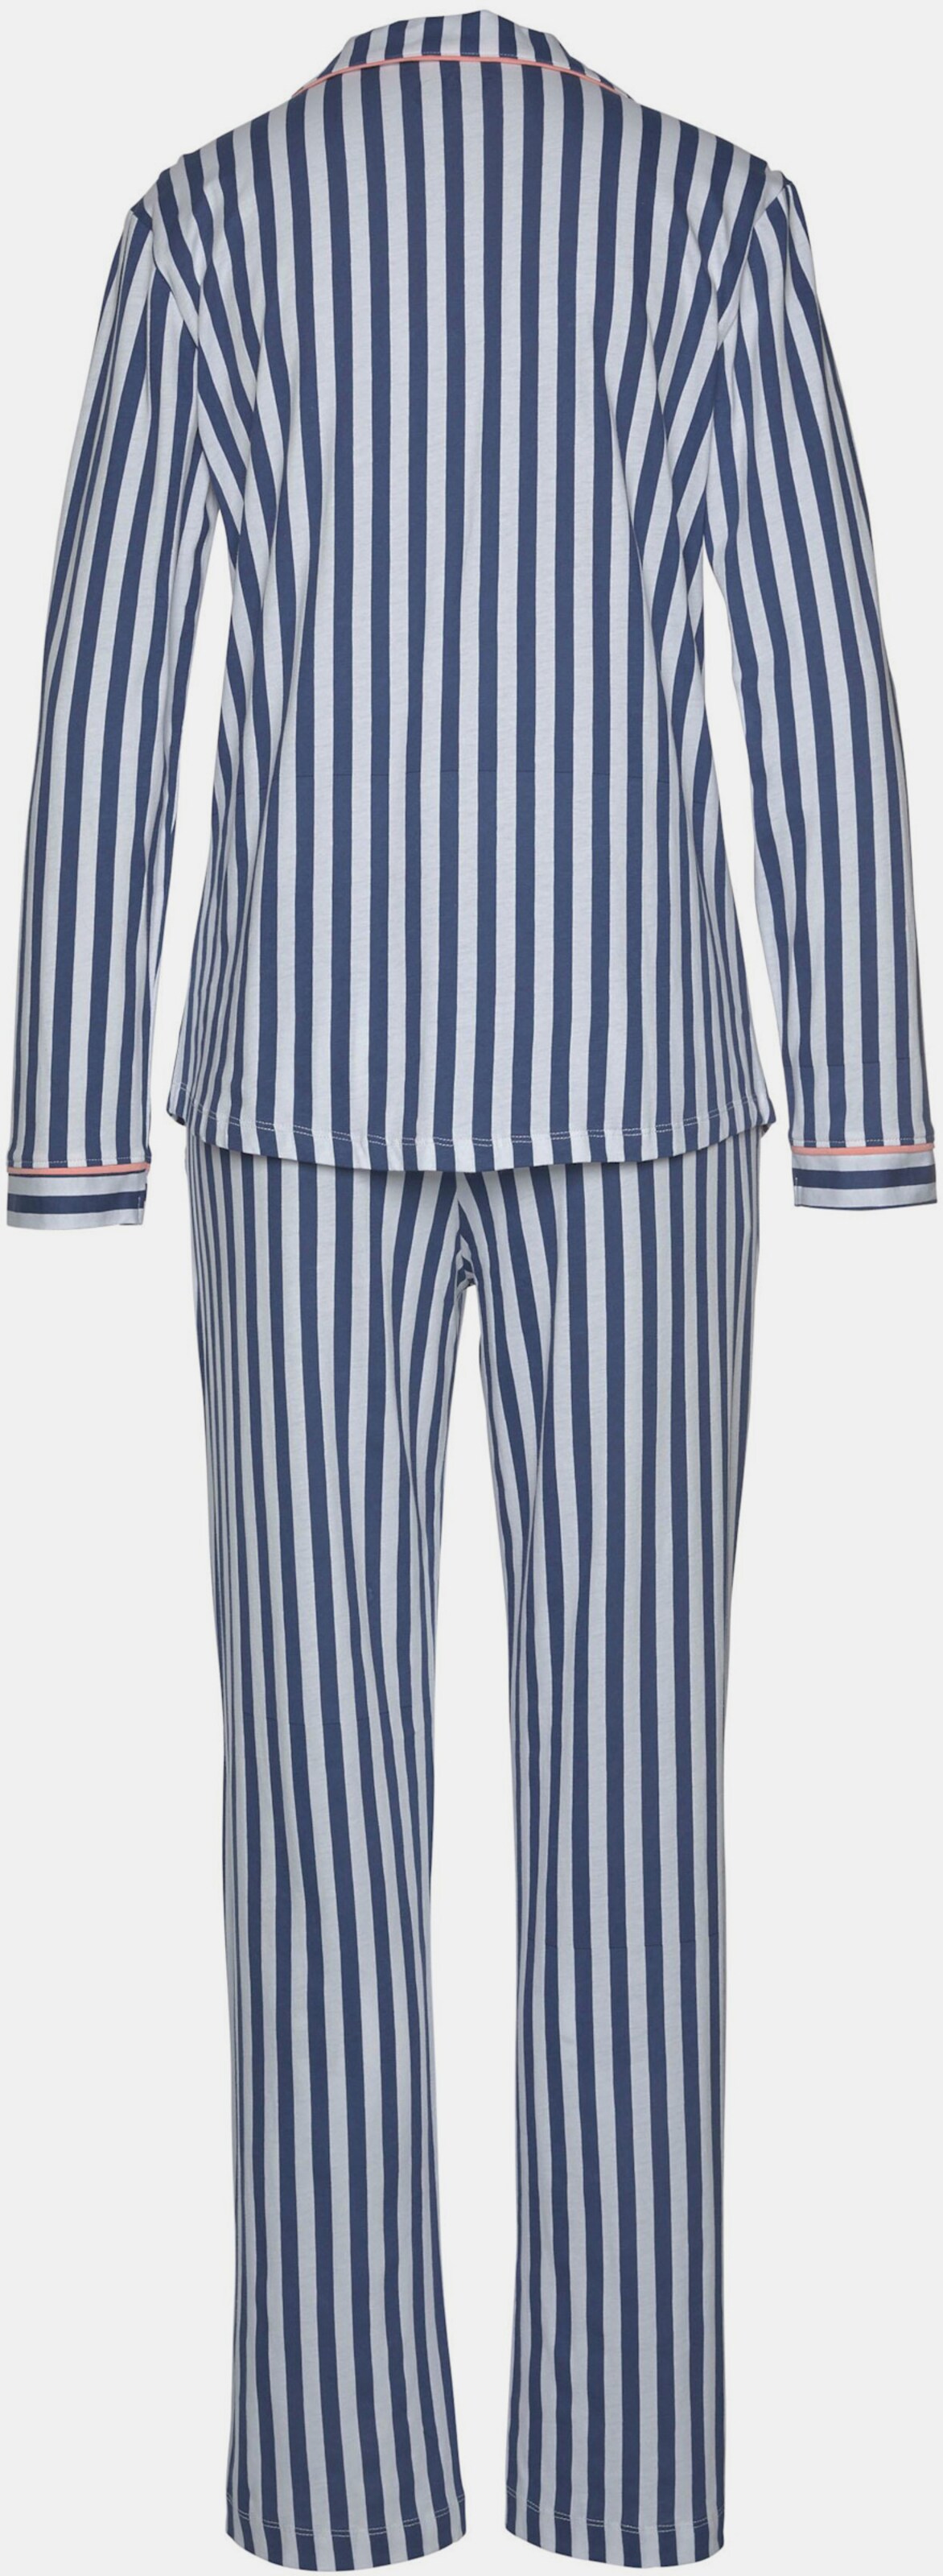 H.I.S Pyjama - dunkelblau-weiß-gestreift